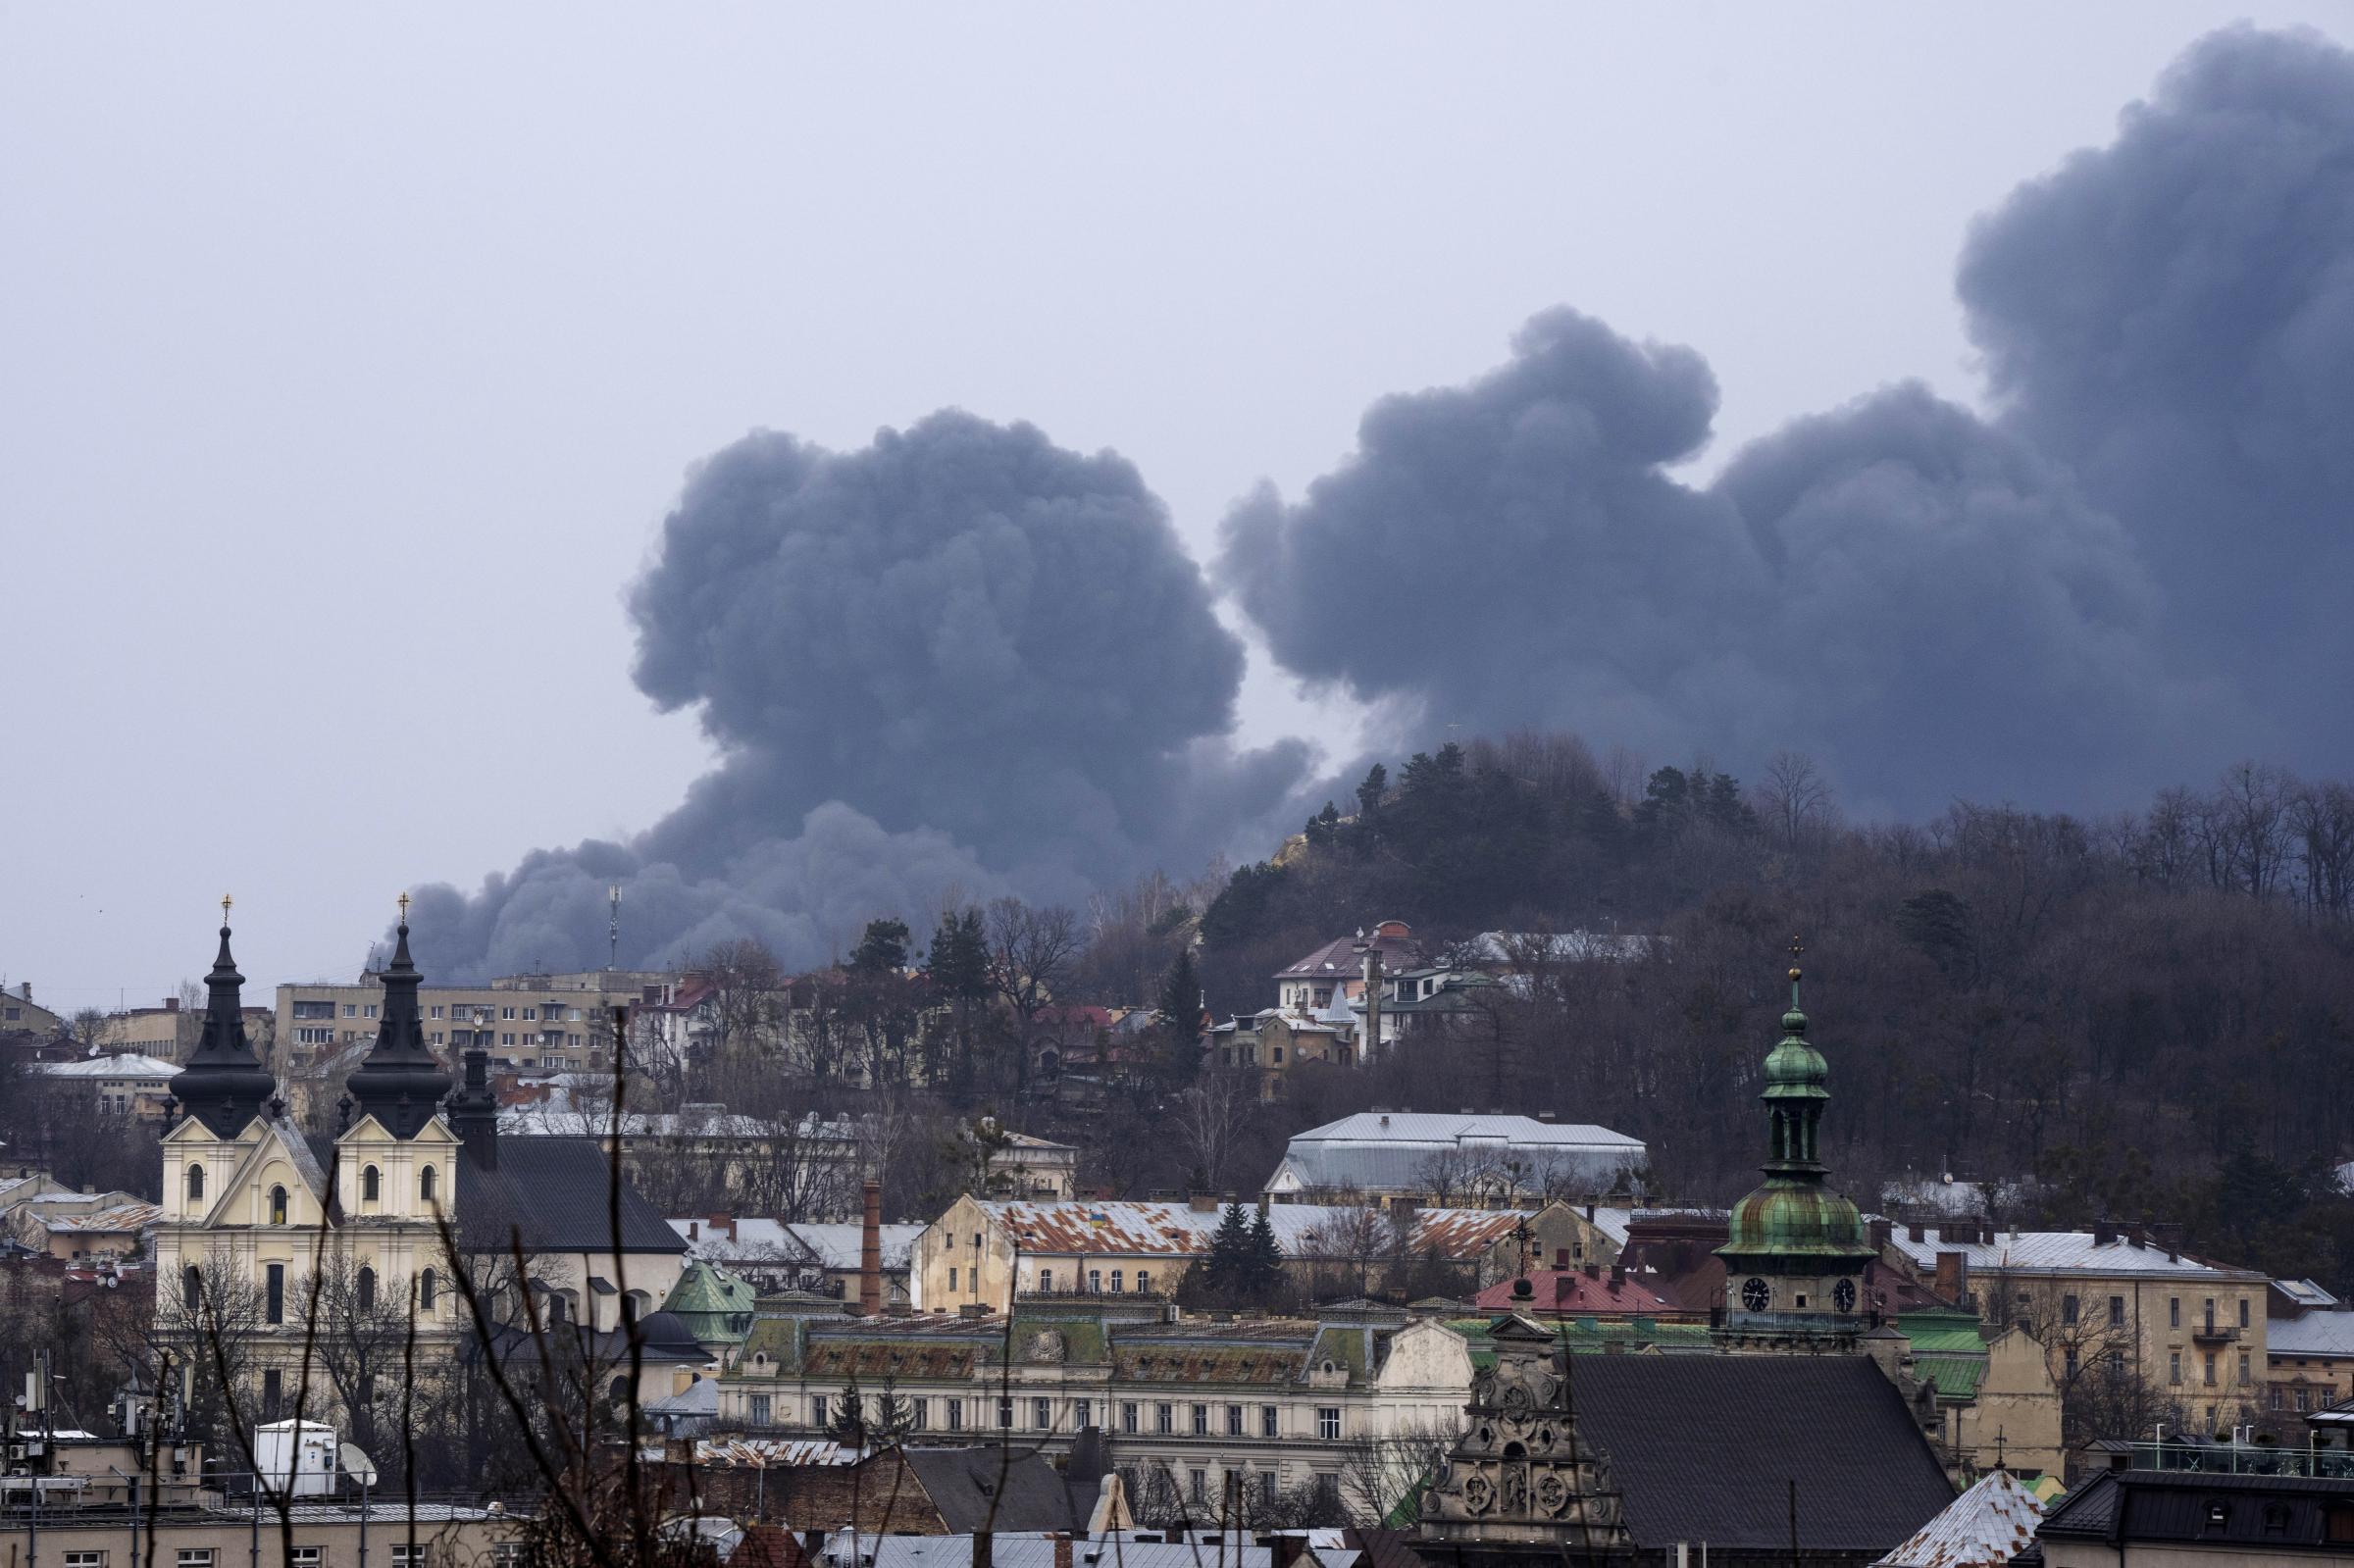  Russian rockets struck the western Ukrainian city of Lviv on March 26, 2022 as President Joe Biden visited neighboring Poland. 